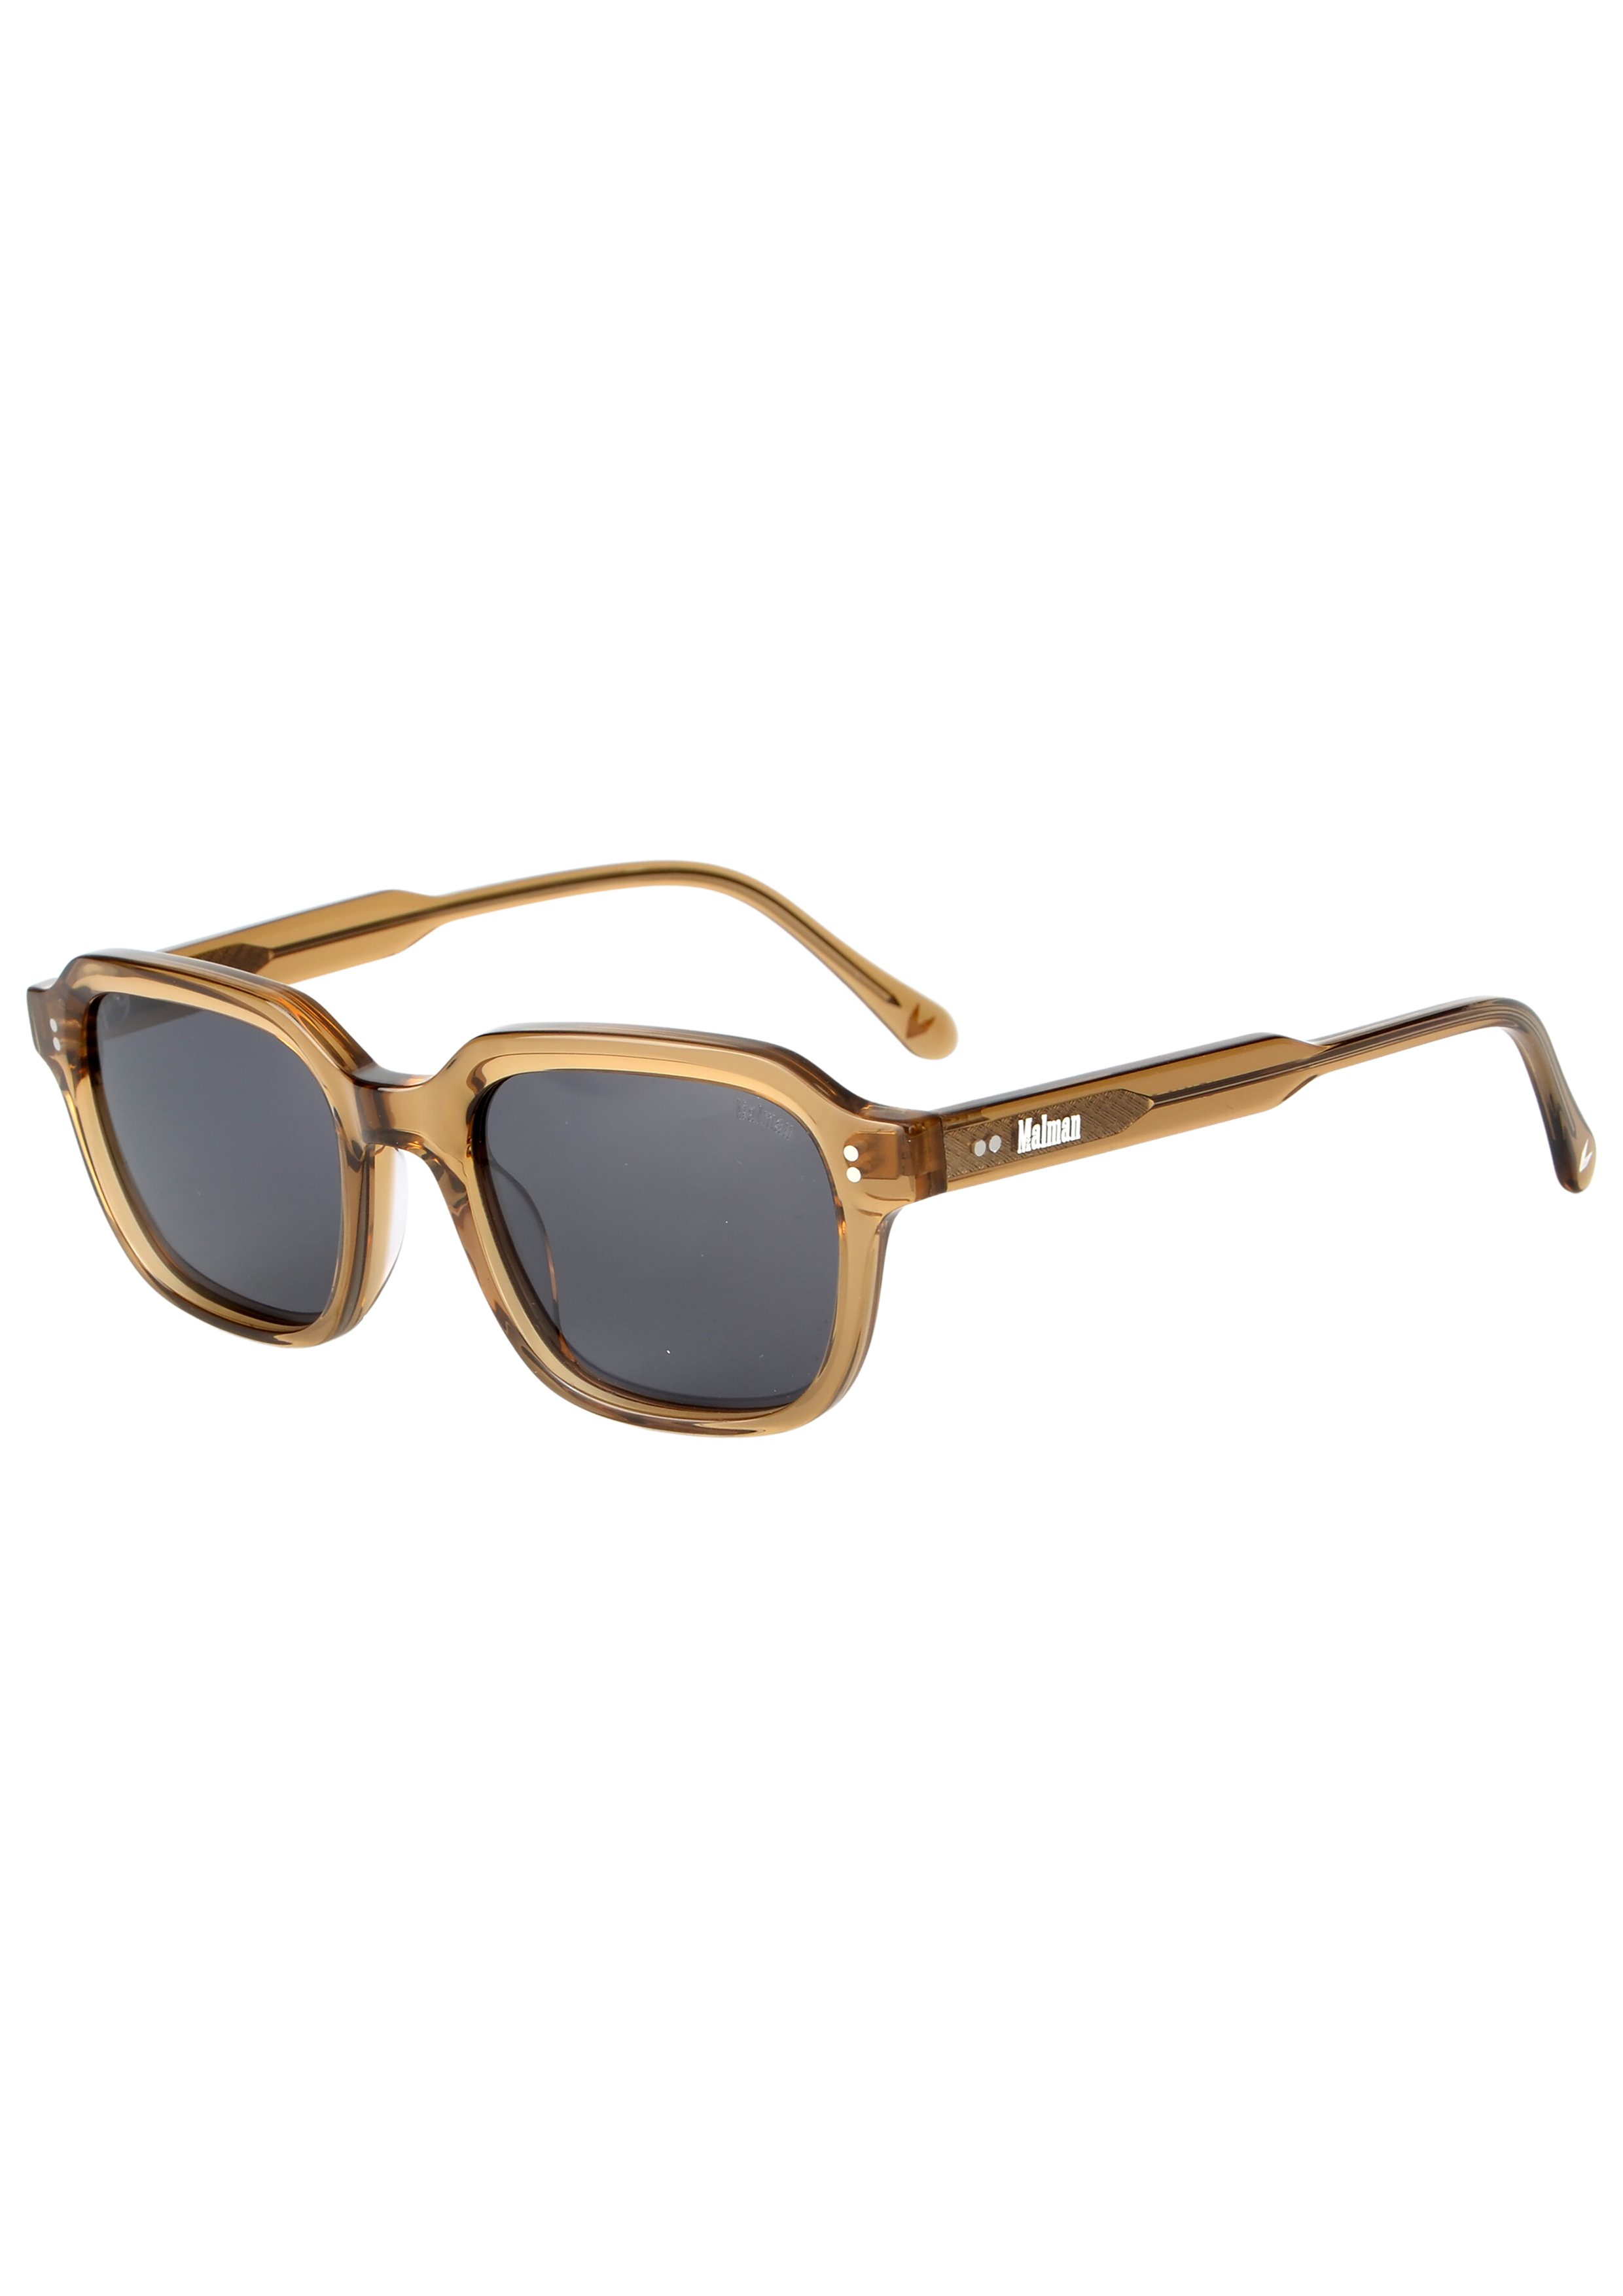 Malman Catalunya Sunglasses - Malman London | Modern Streetwear, Racing Heritage